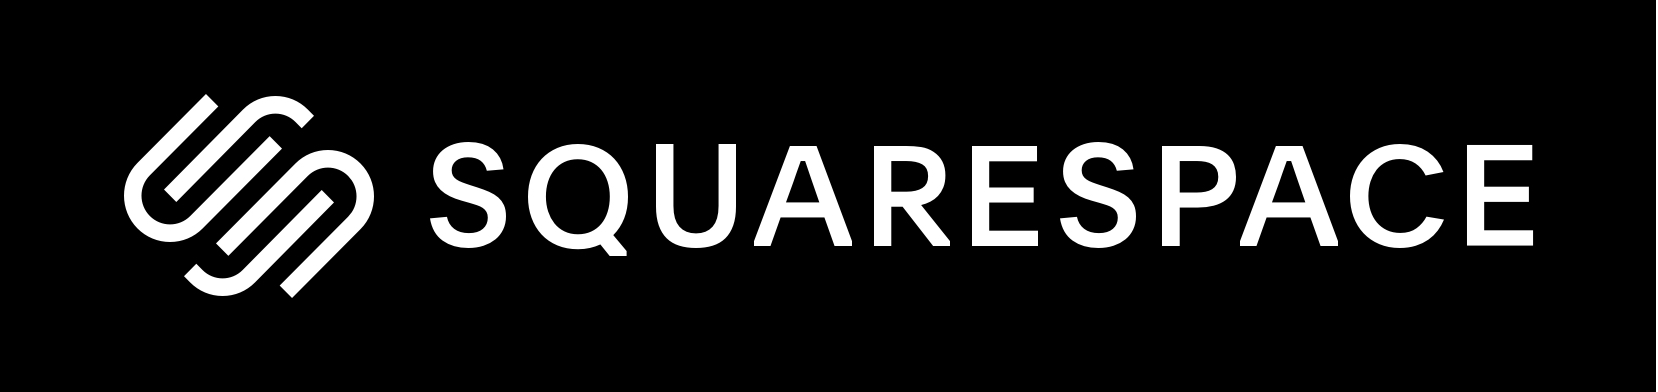 Squarespace company logo